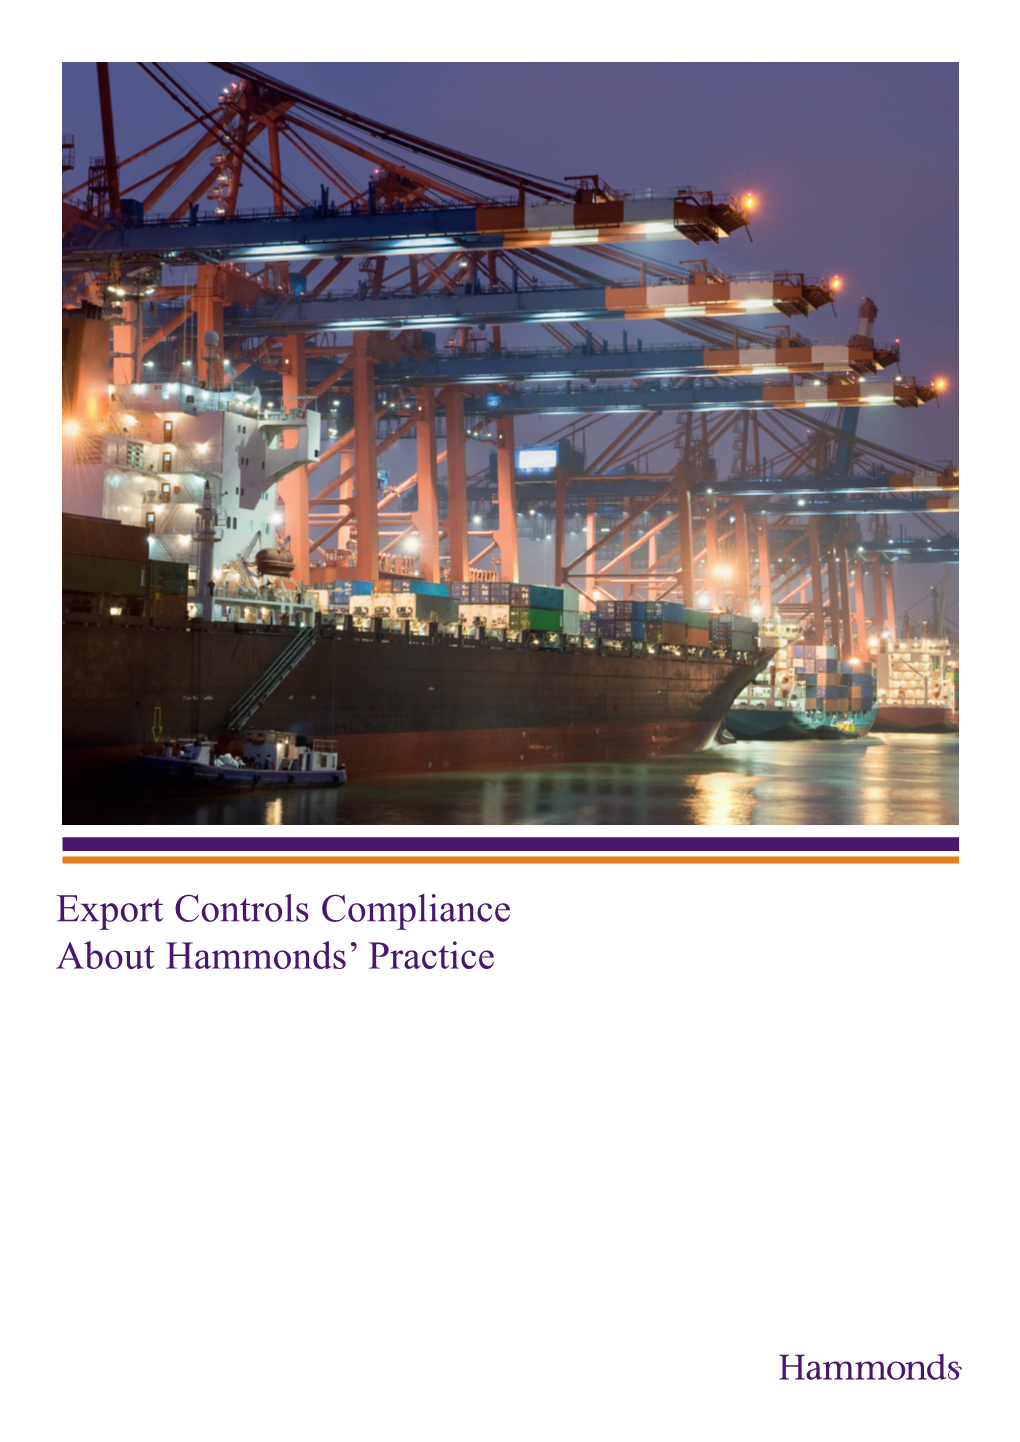 Export Controls Compliance About Hammonds' Practice